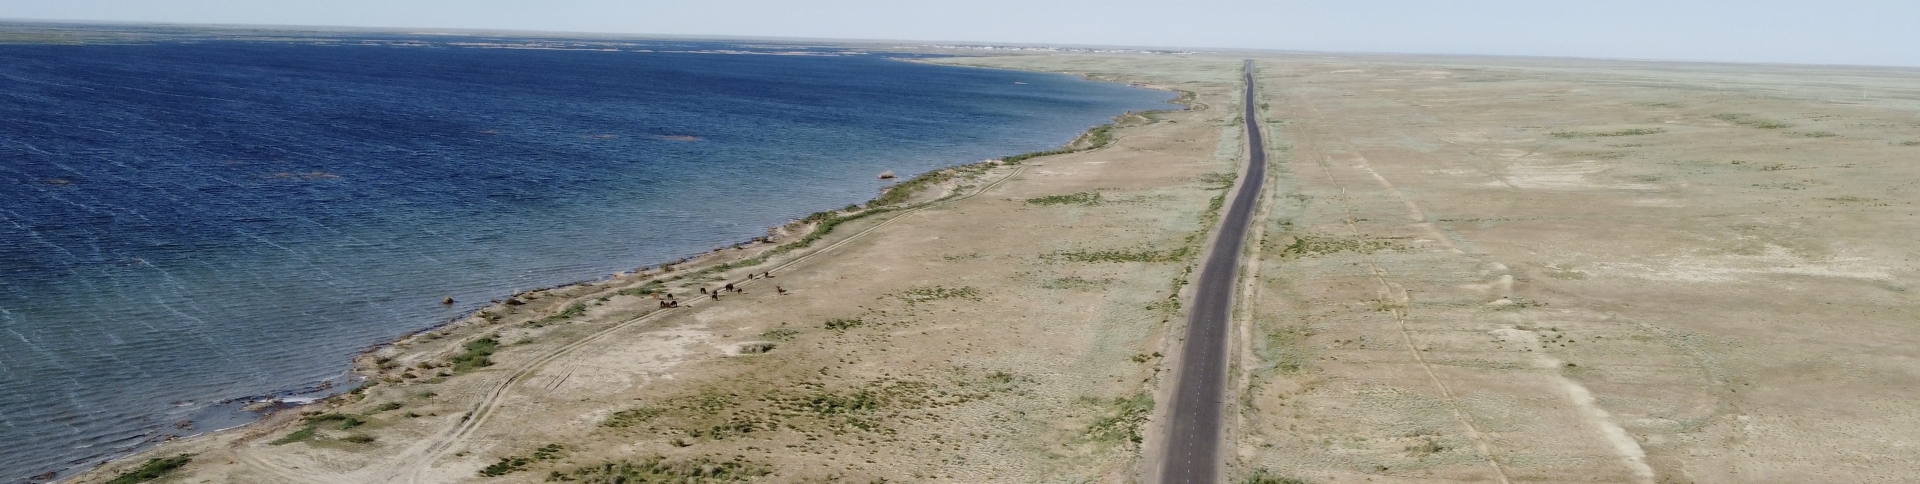 Eine Straße entlang des Aralsees